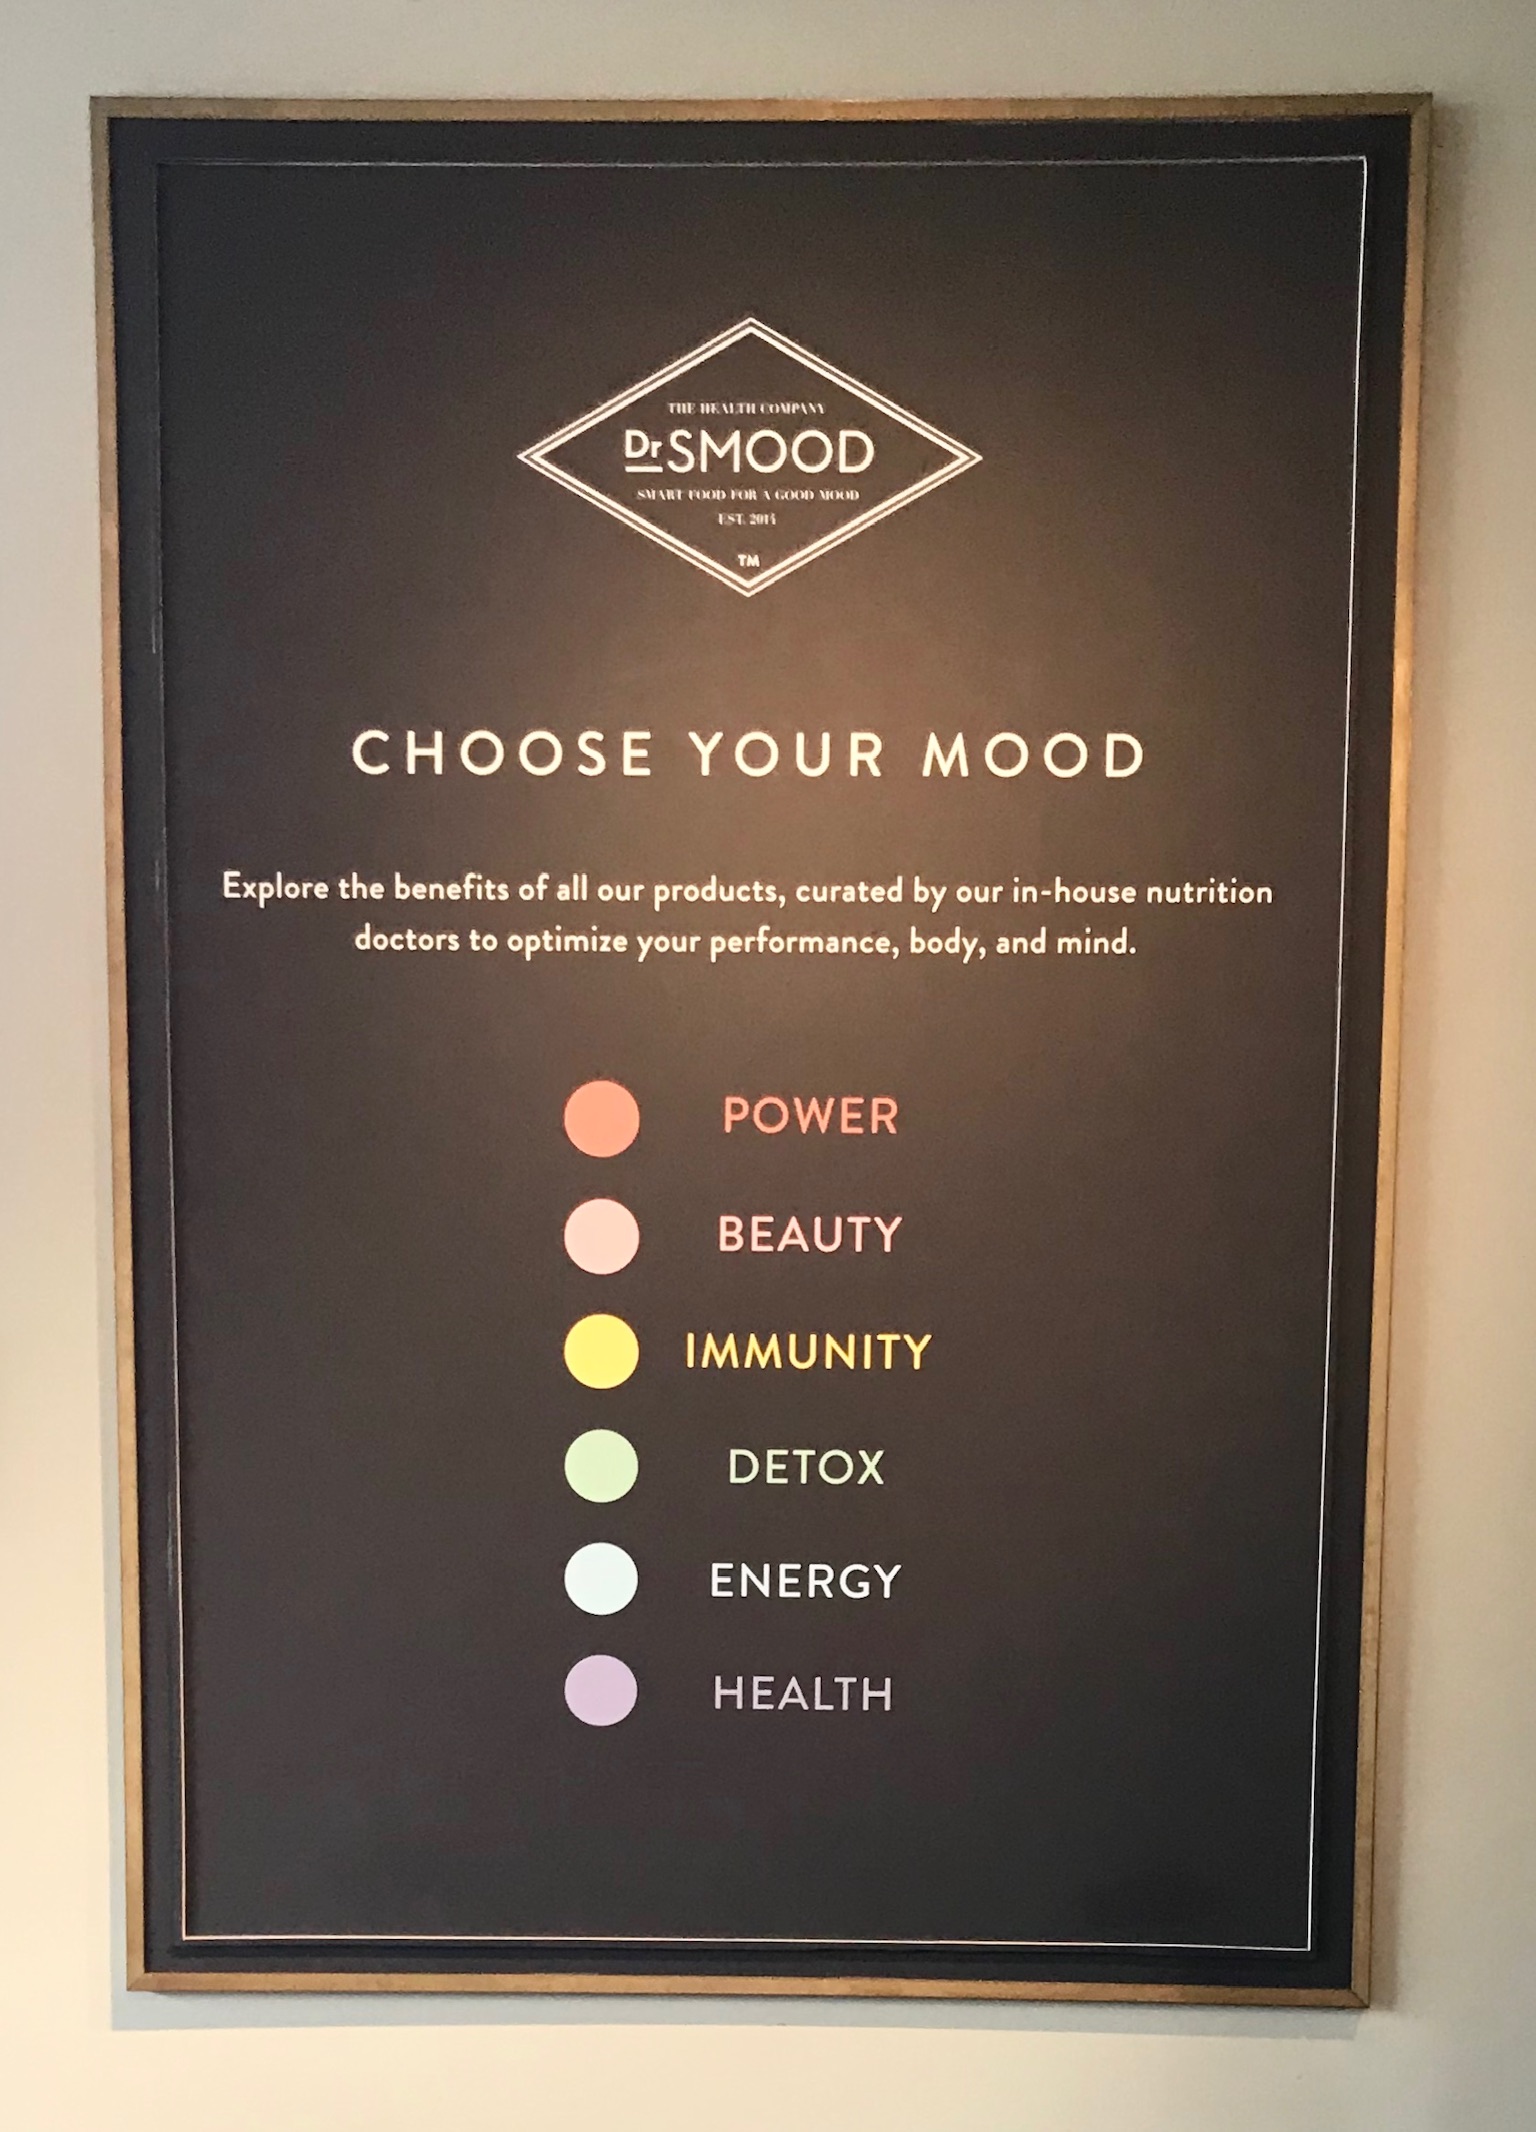 Dr Smood's Moods